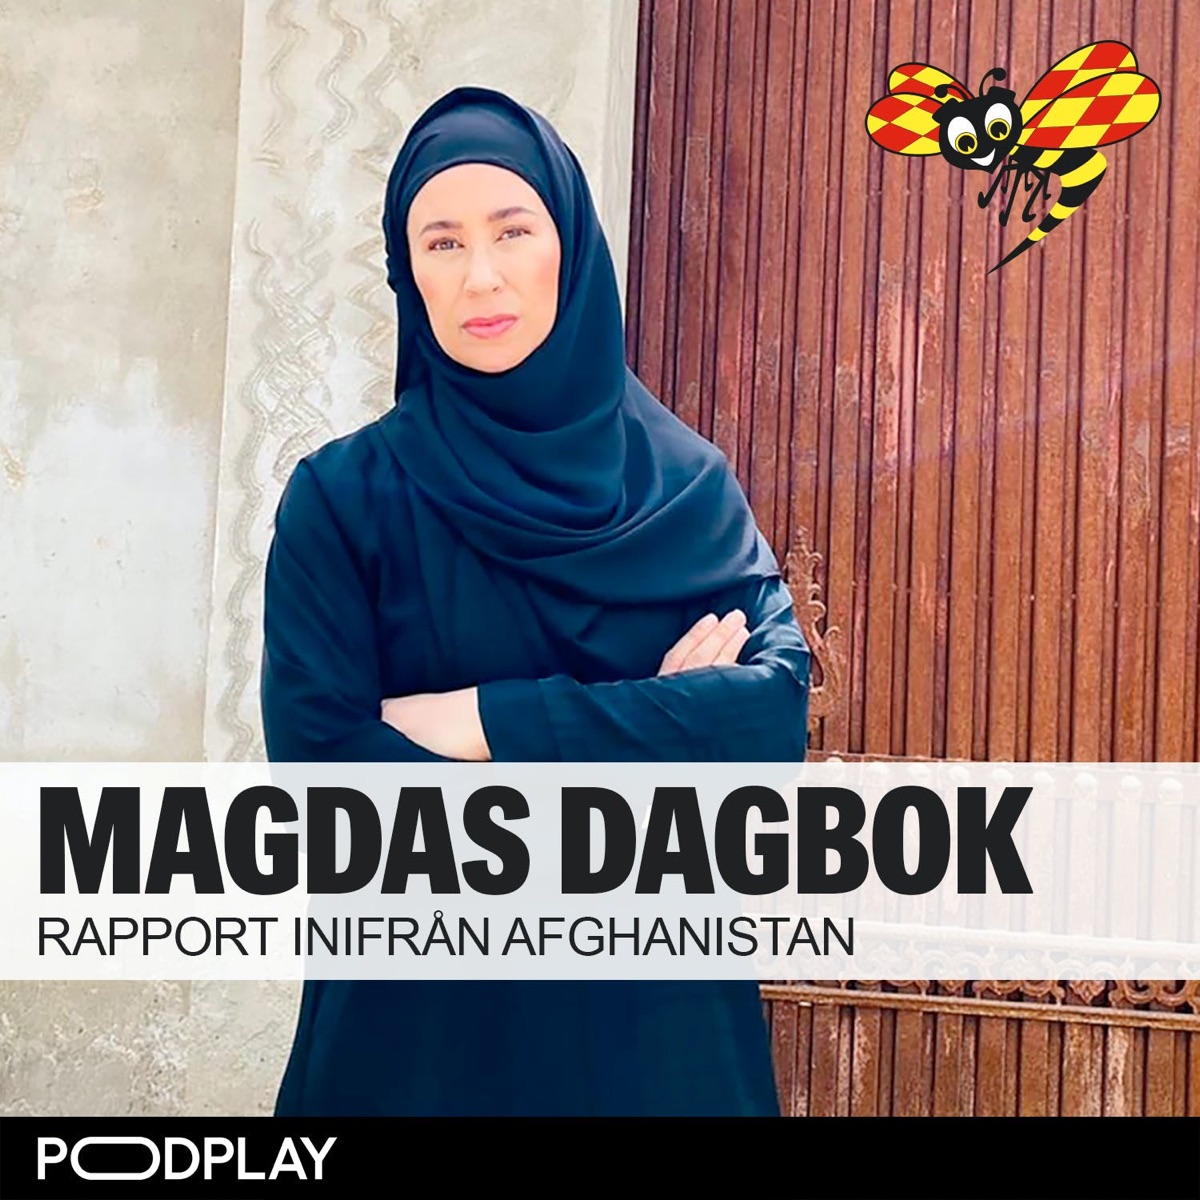 TRAILER: Magdas dagbok - rapport inifrån Afghanistan